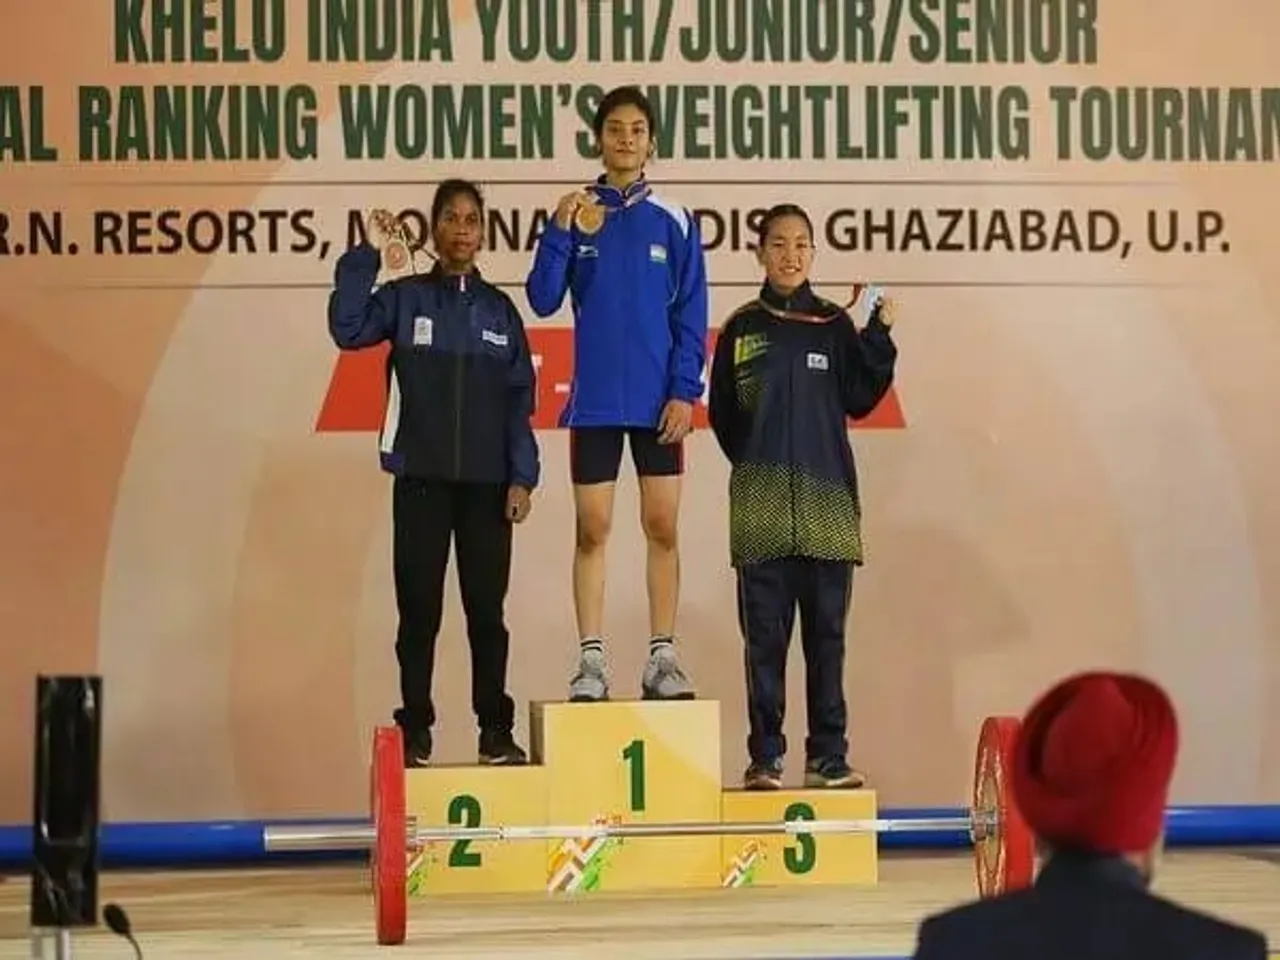 Maharashtra's Akanksha Vyavahare made three new national records at the Khelo India Weightlifting Tournament | Sportz Point